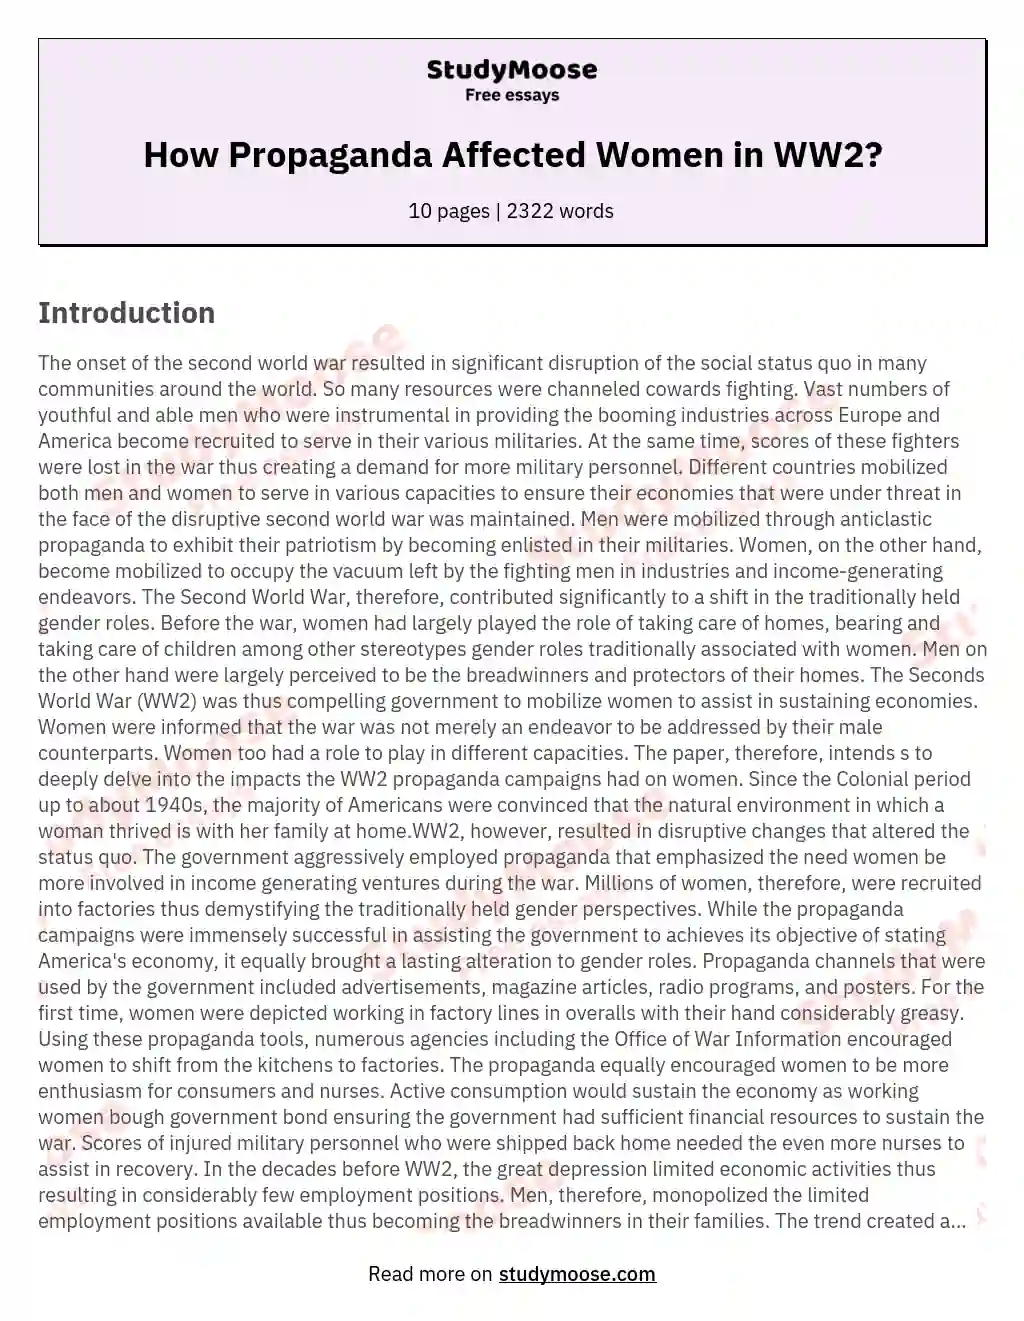 How Propaganda Affected Women in WW2? essay